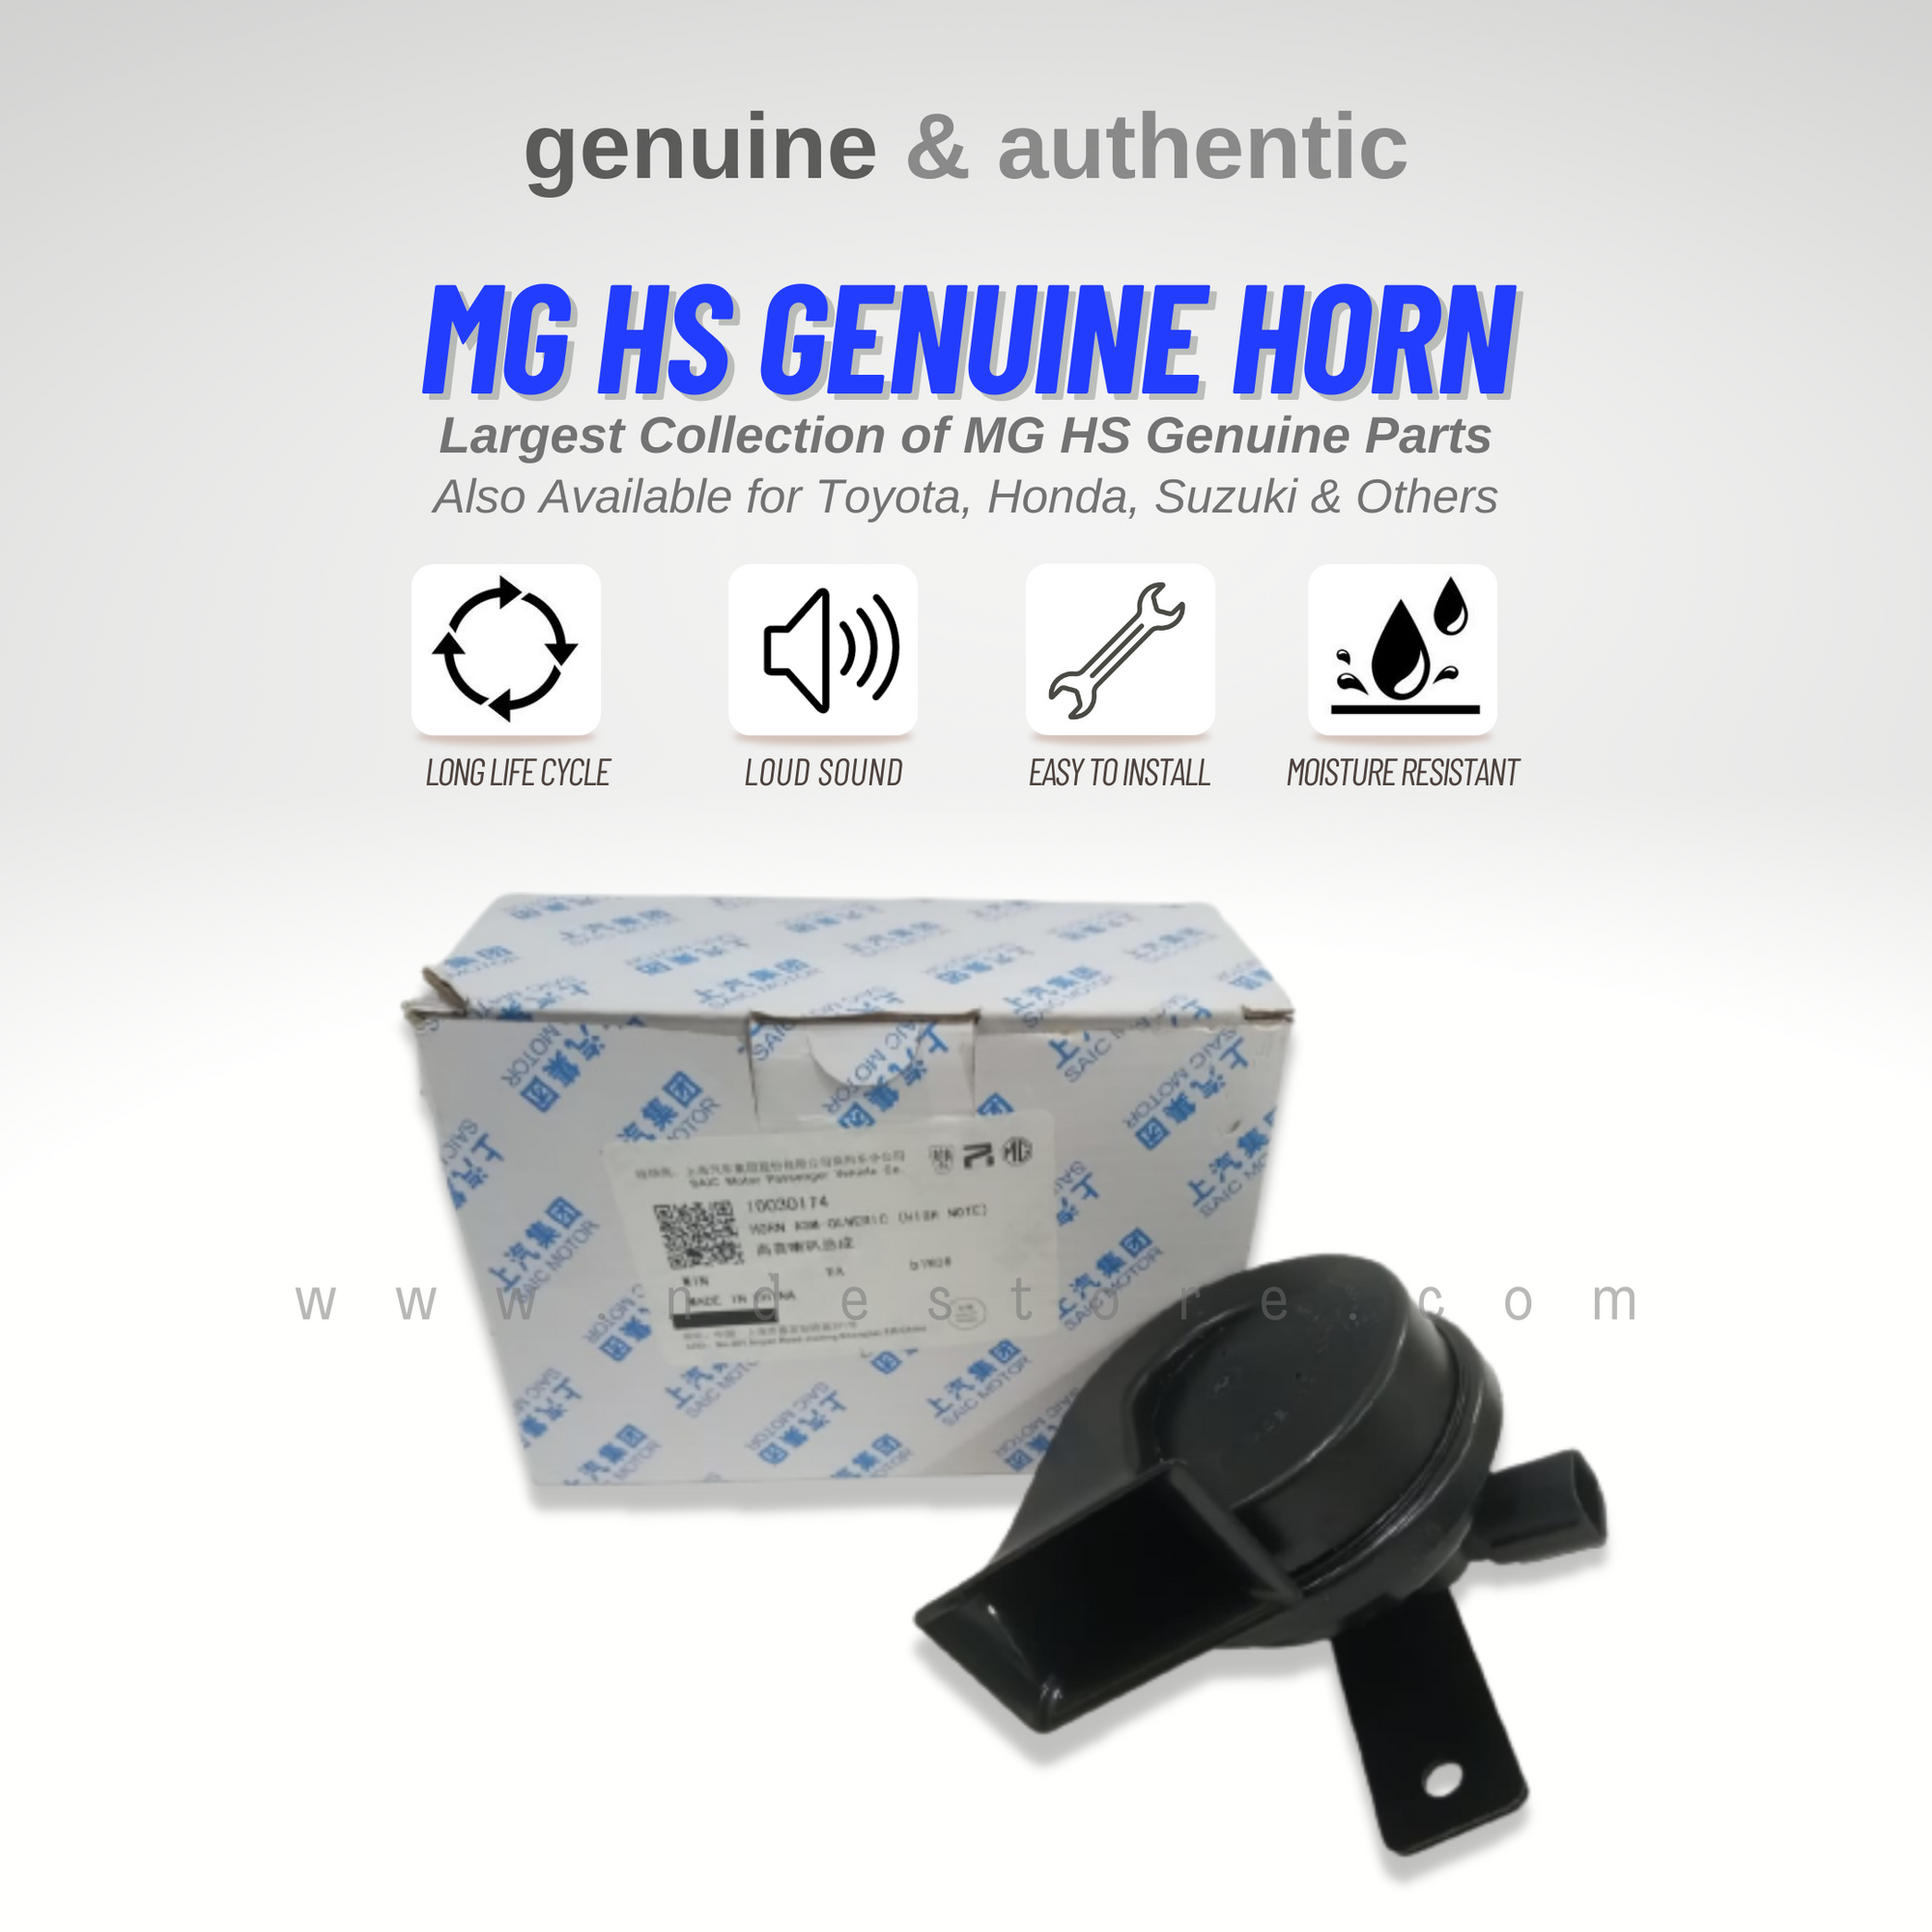 HORN SET GENUINE FOR MG HS